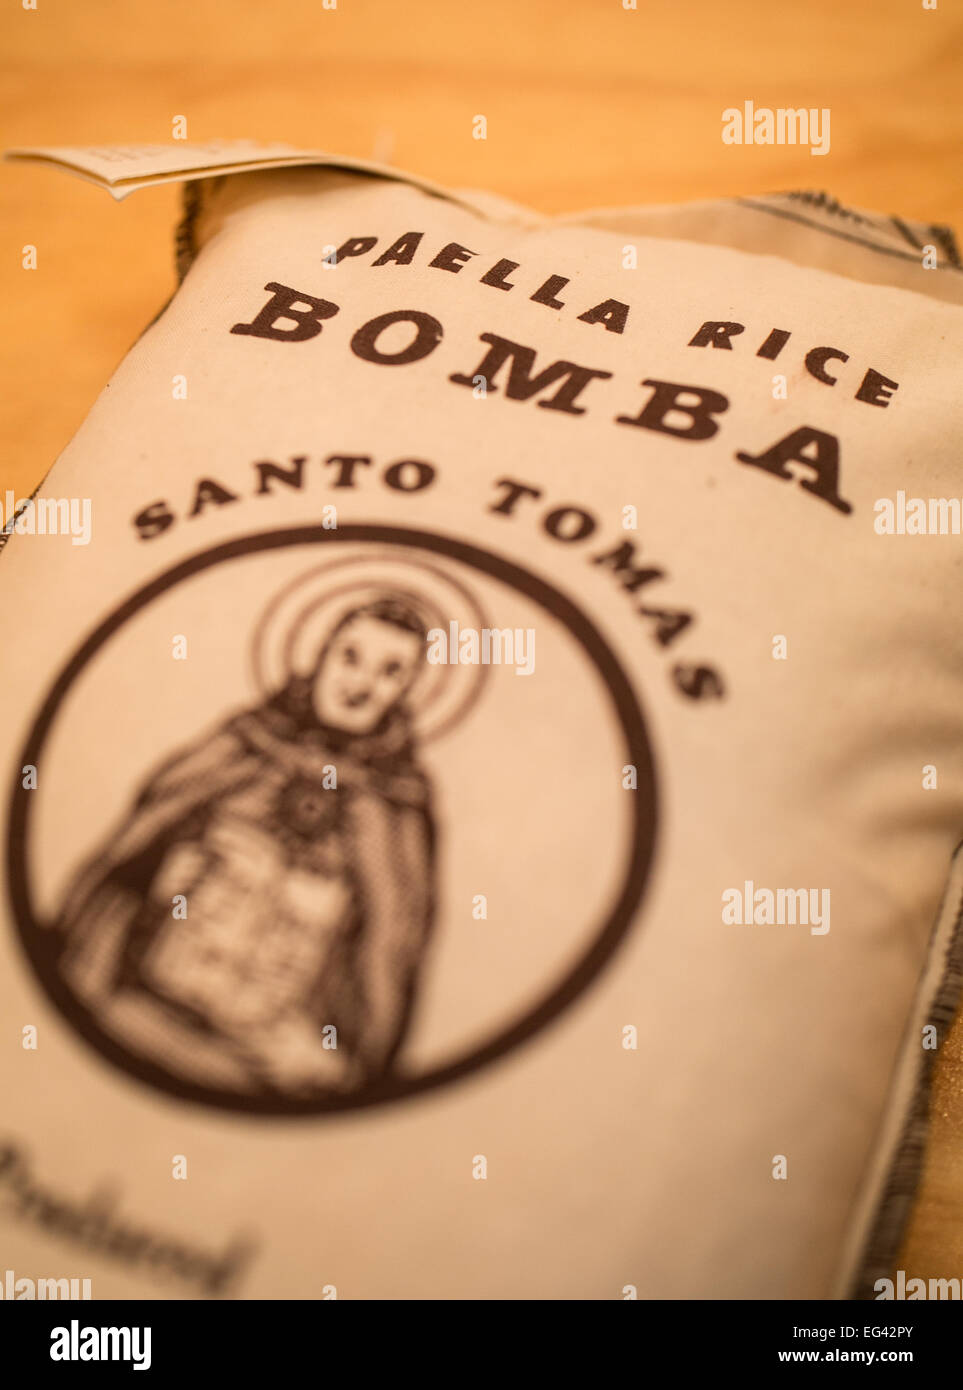 Bomba Paella Rice Stock Photo